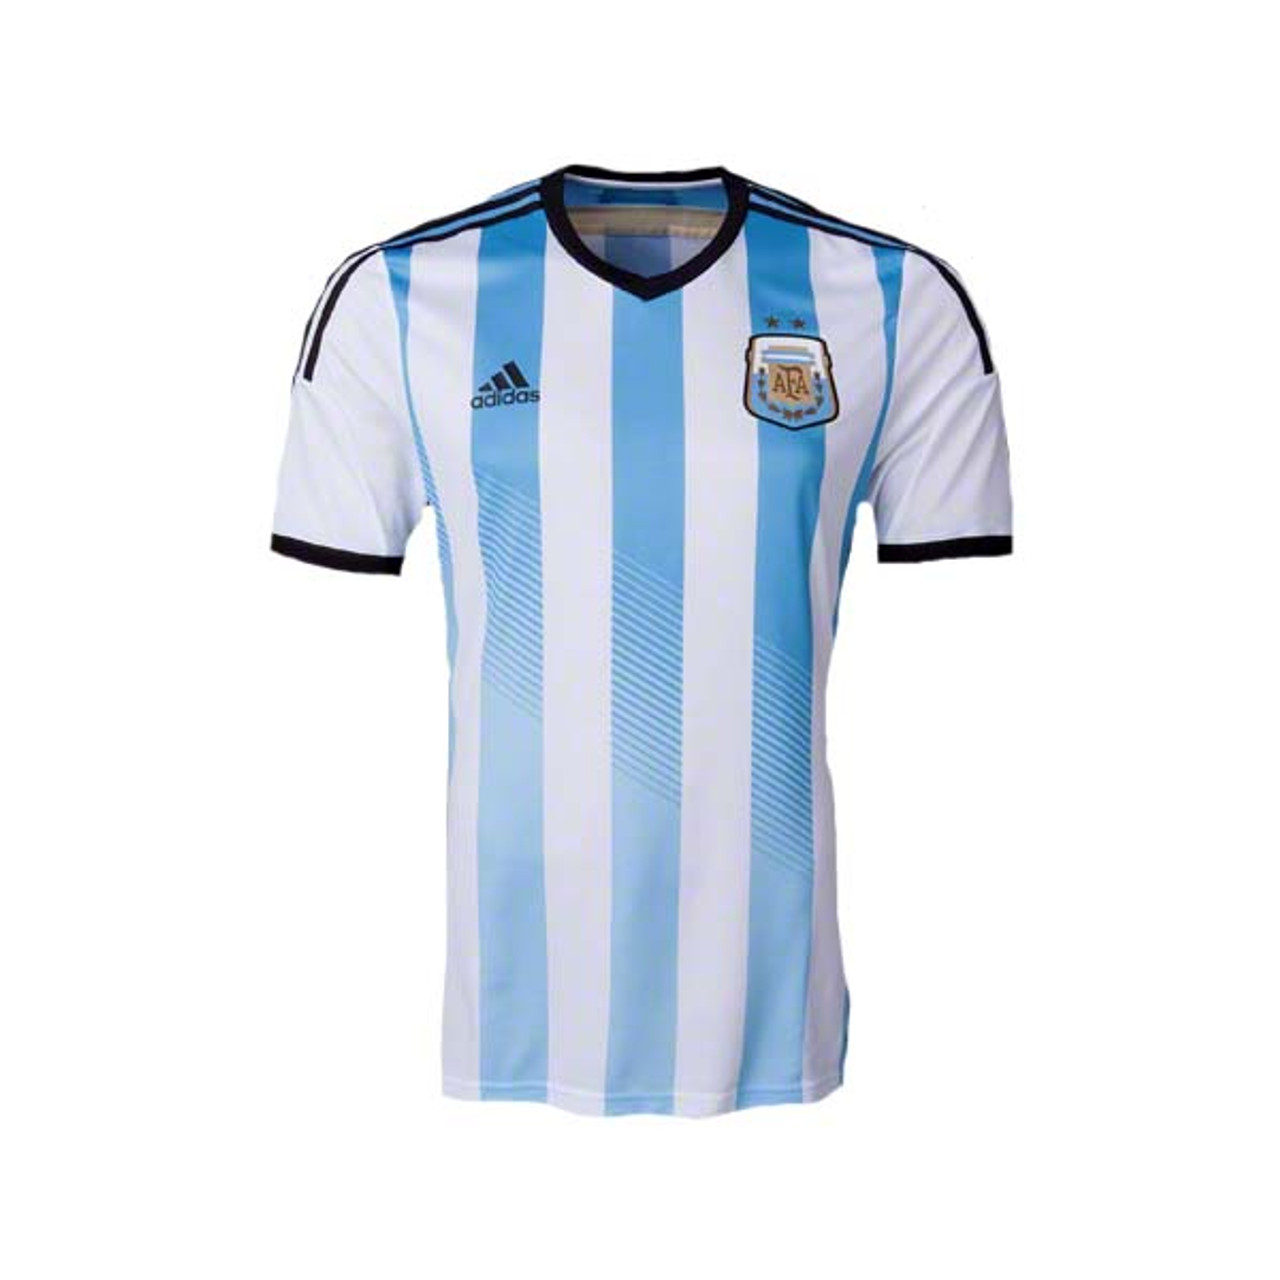 adidas argentina world cup